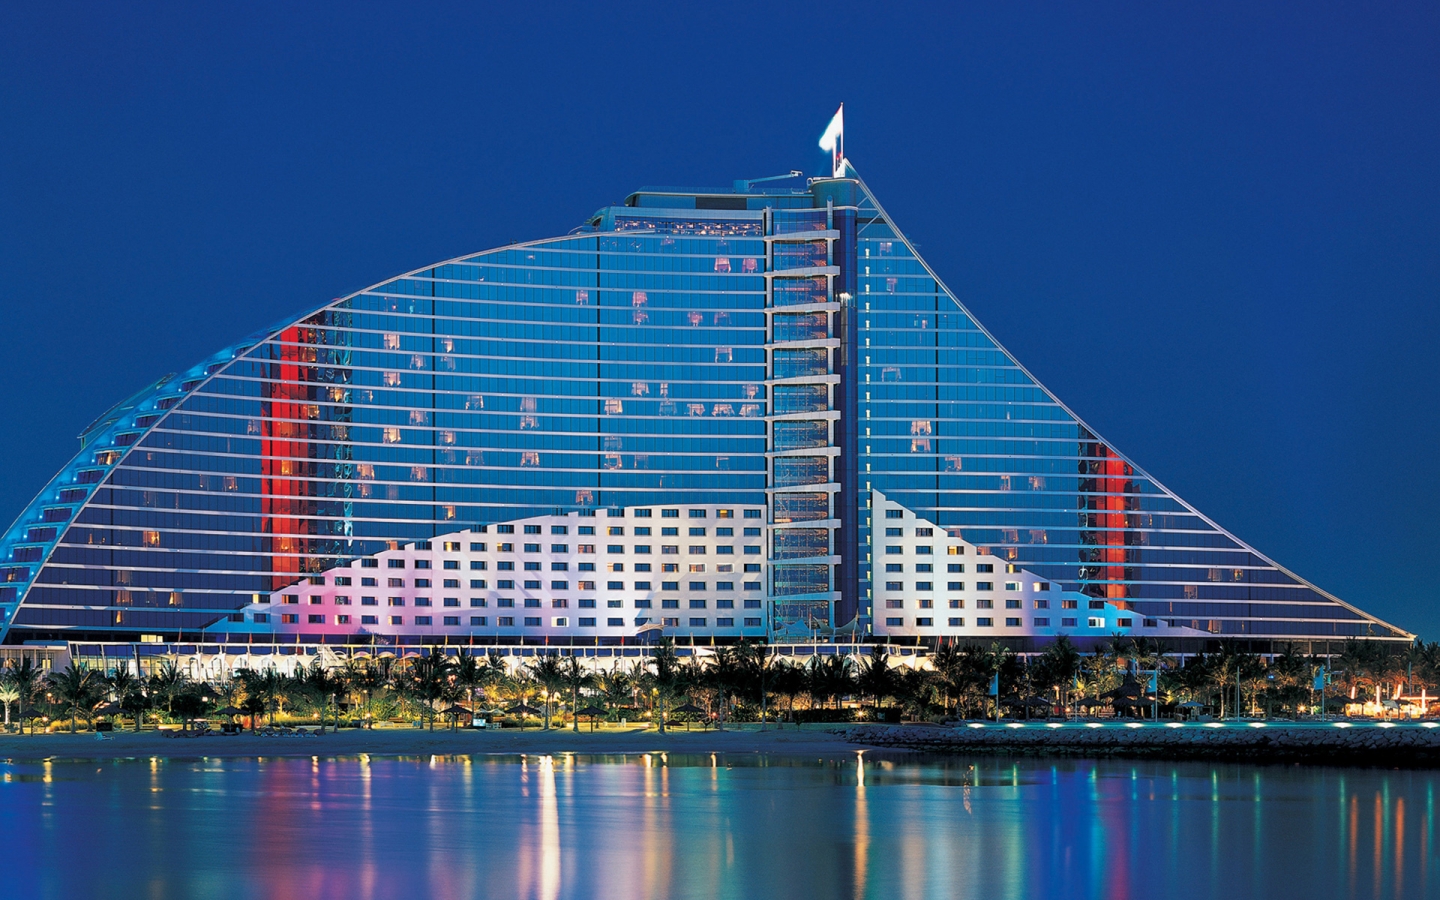 Jumeirah Beach Hotel Dubai for 1440 x 900 widescreen resolution